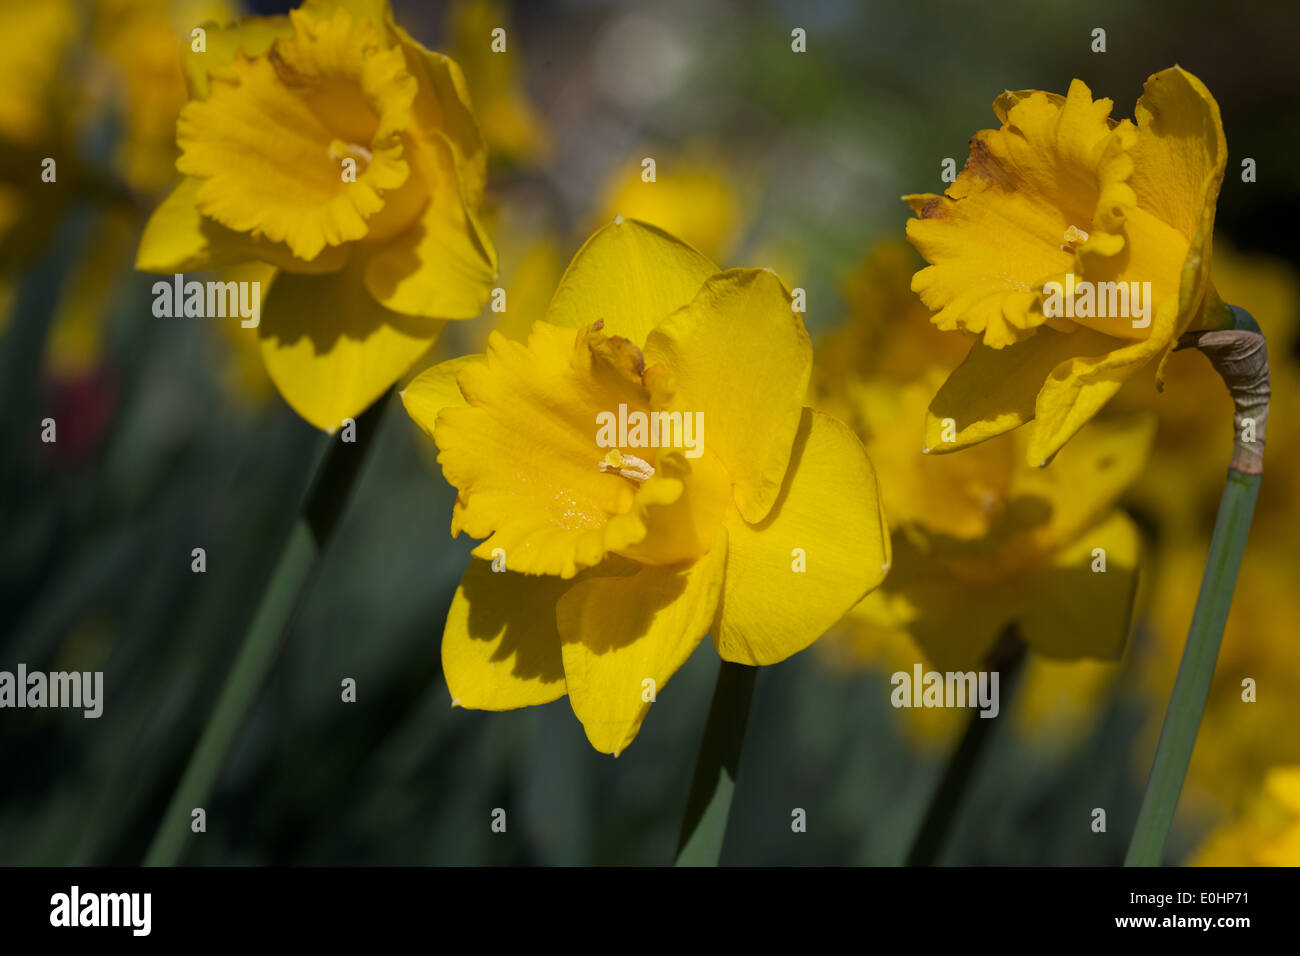 daffodils in Museum Gardens in York Stock Photo - Alamy